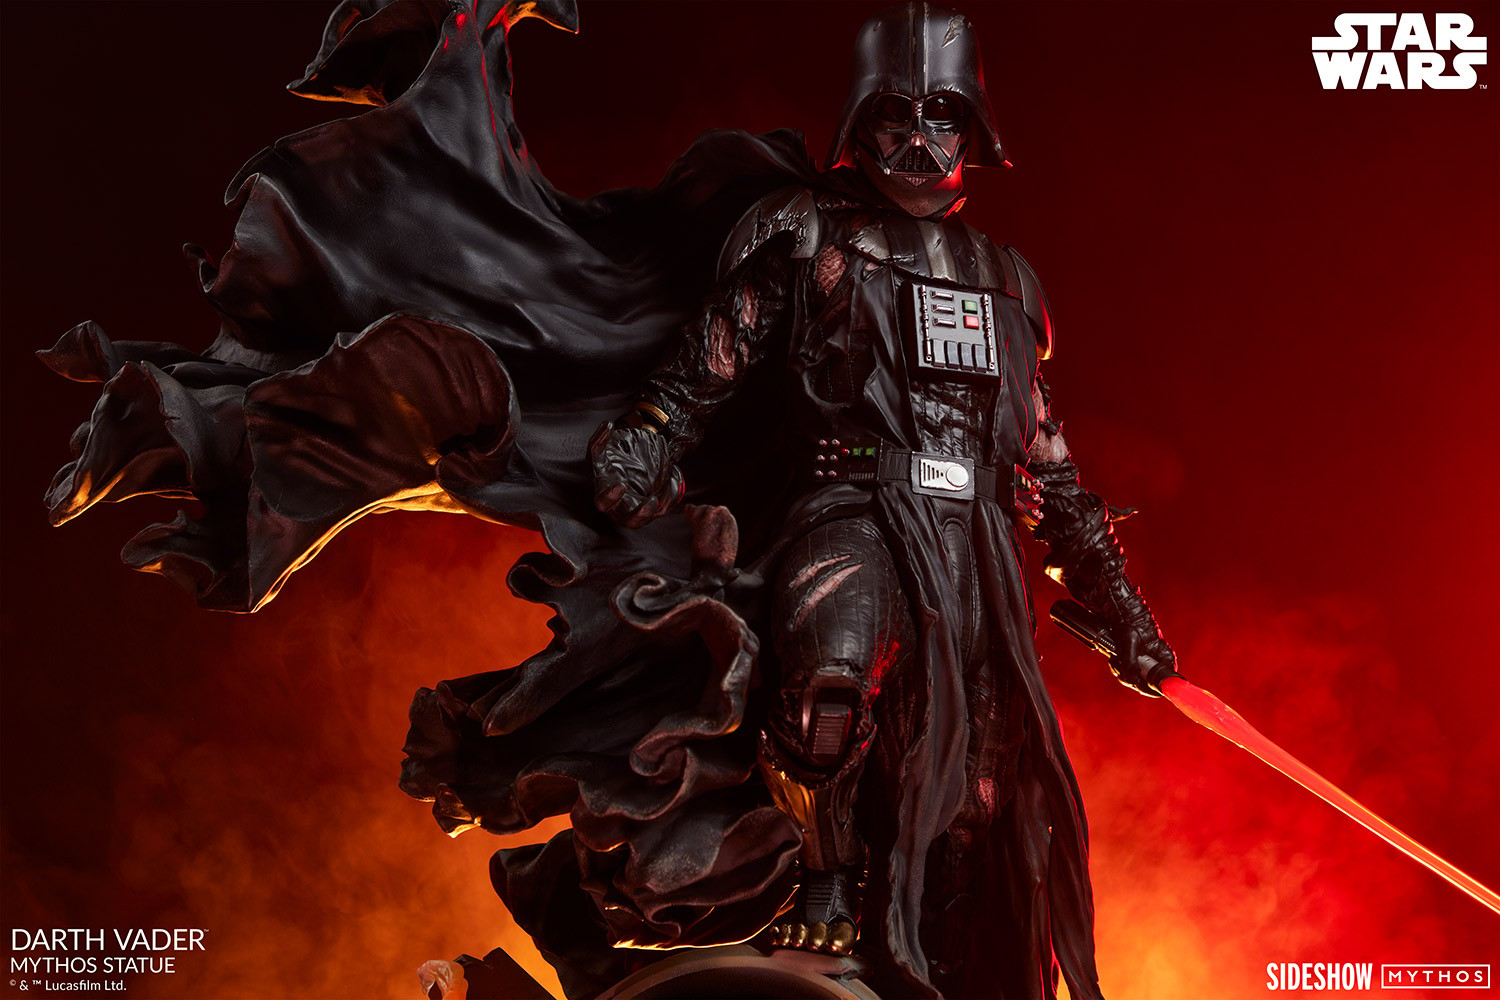 Darth Vader Mythos Exclusive Edition (Prototype Shown) View 28